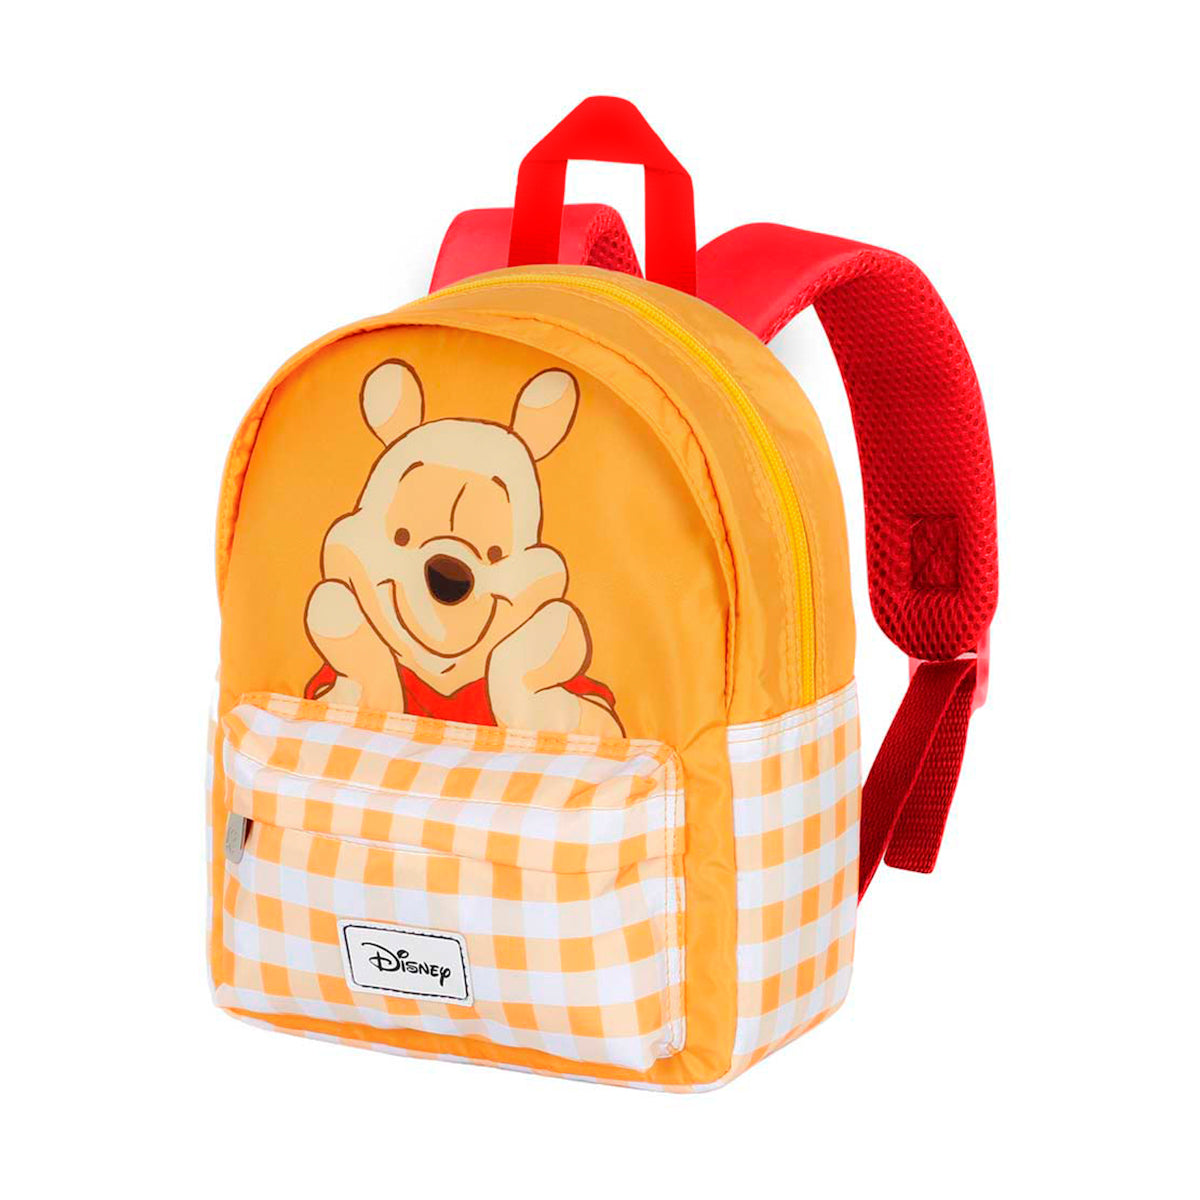 DISNEY Winnie the Pooh - Mochila Infantil para Preescolar con Compartimento Único